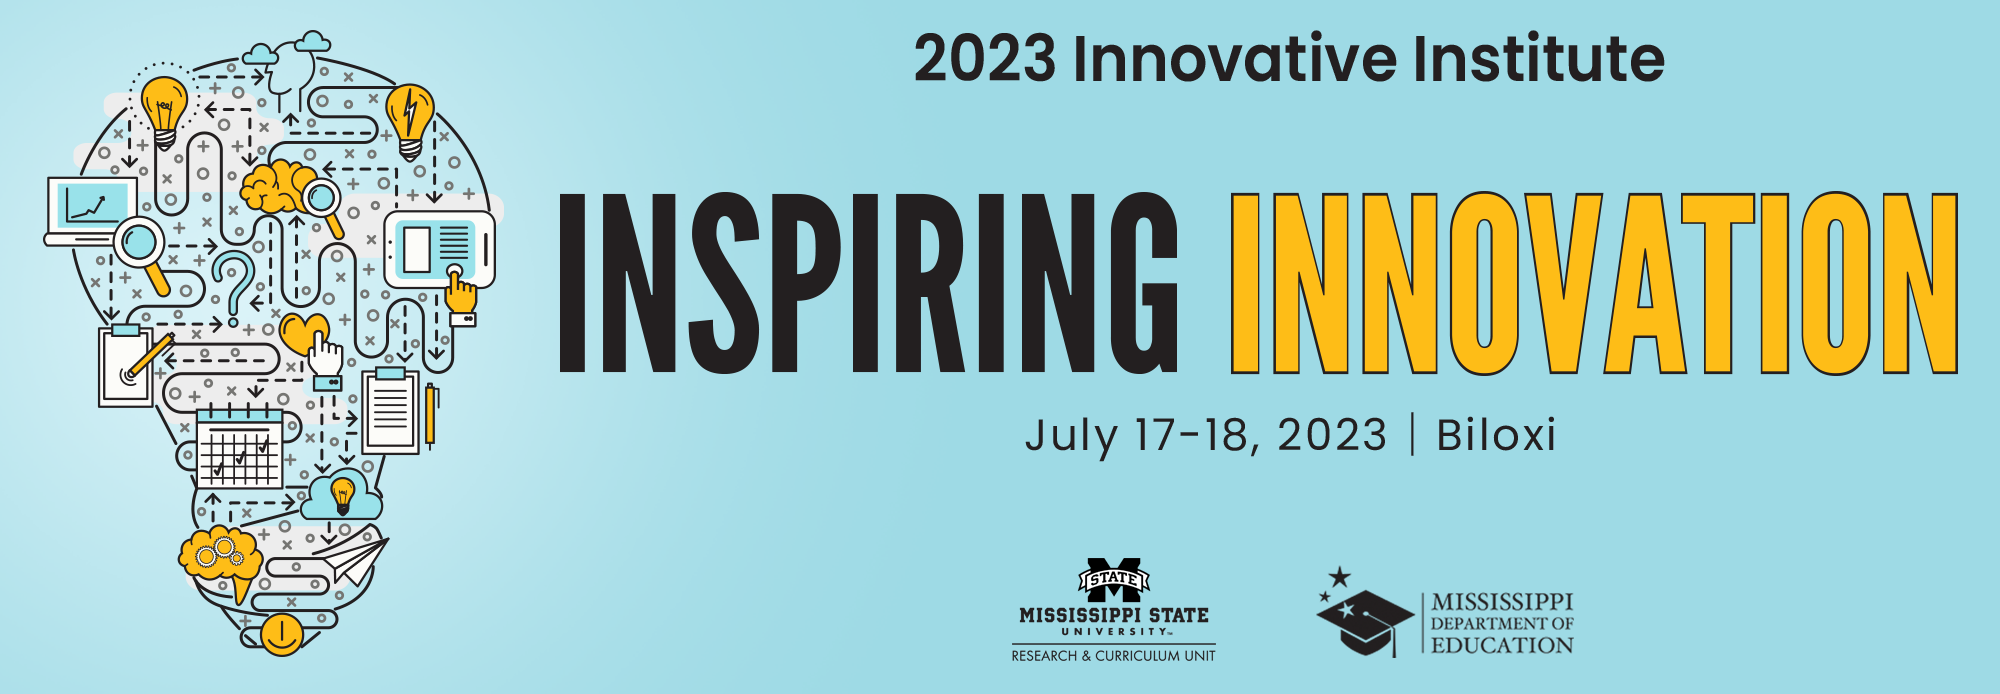 2023 Innovative Institute July 17-18, Biloxi